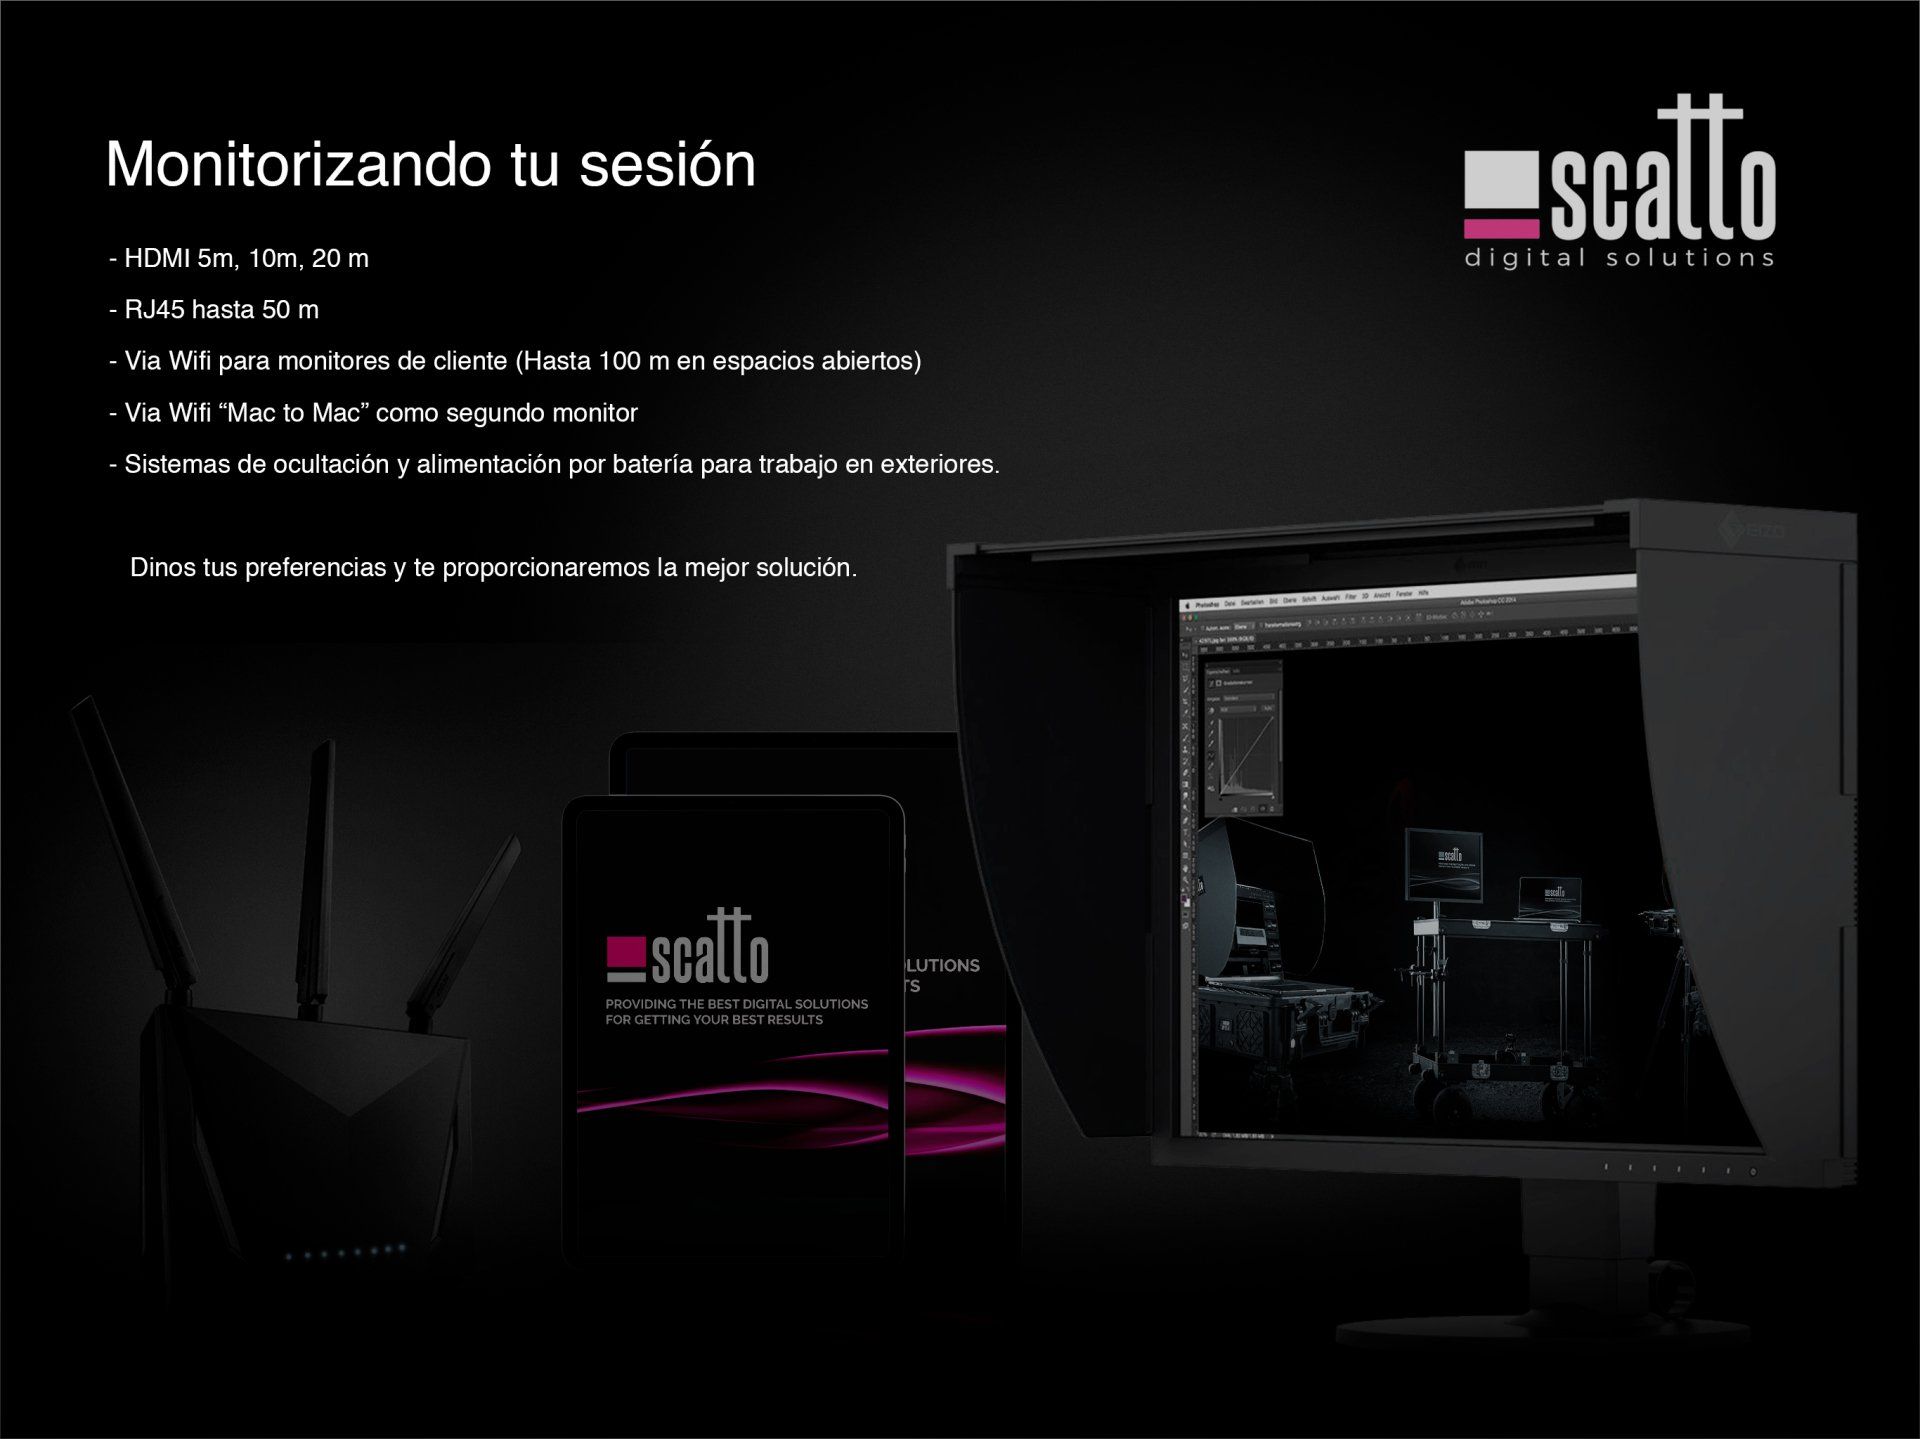 Scatto Digital Solutions & Monitores Screens on set & Digital Tech & Rental Digital Madrid Spain